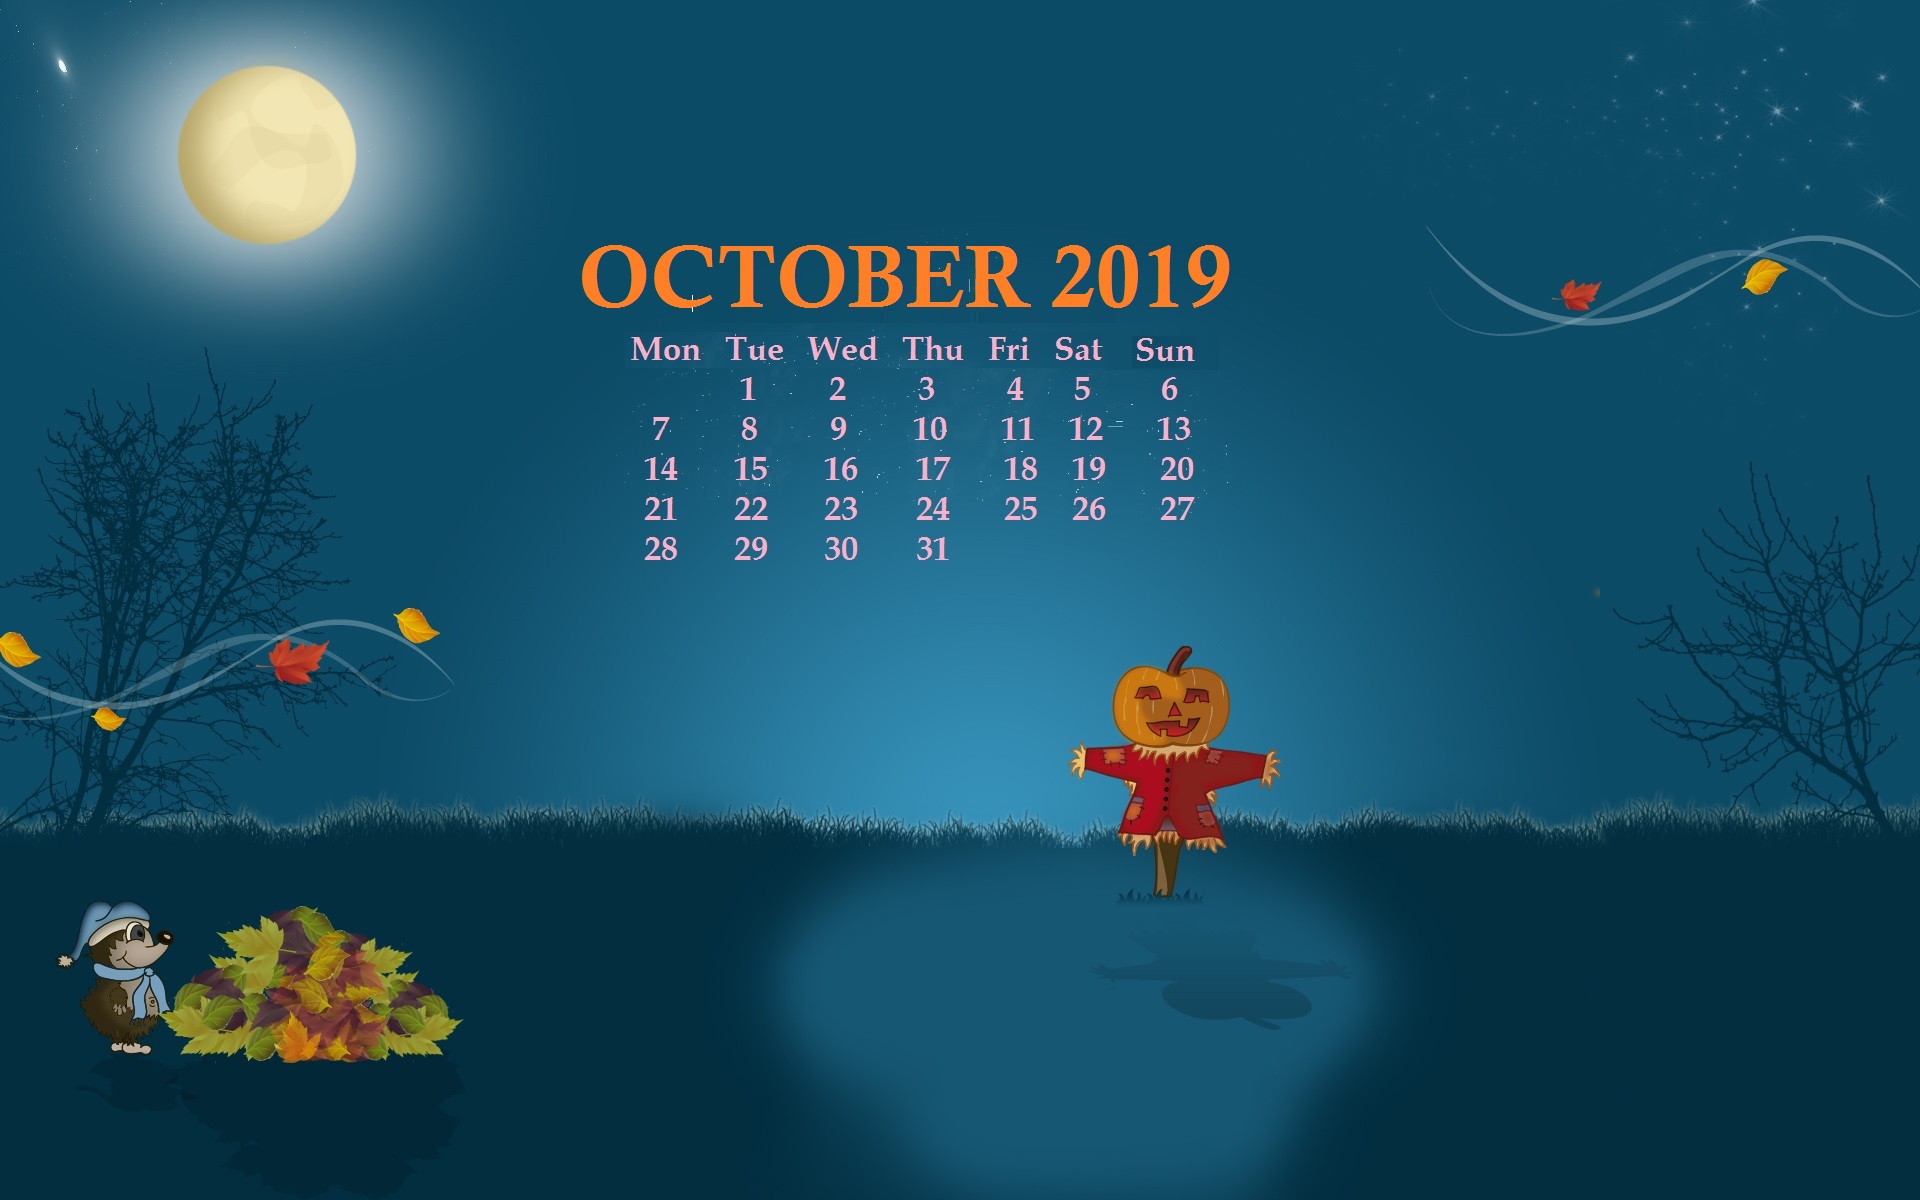 October 2019 Halloween Screensaver Wallpaper - October 2019 Desktop Calendar - HD Wallpaper 